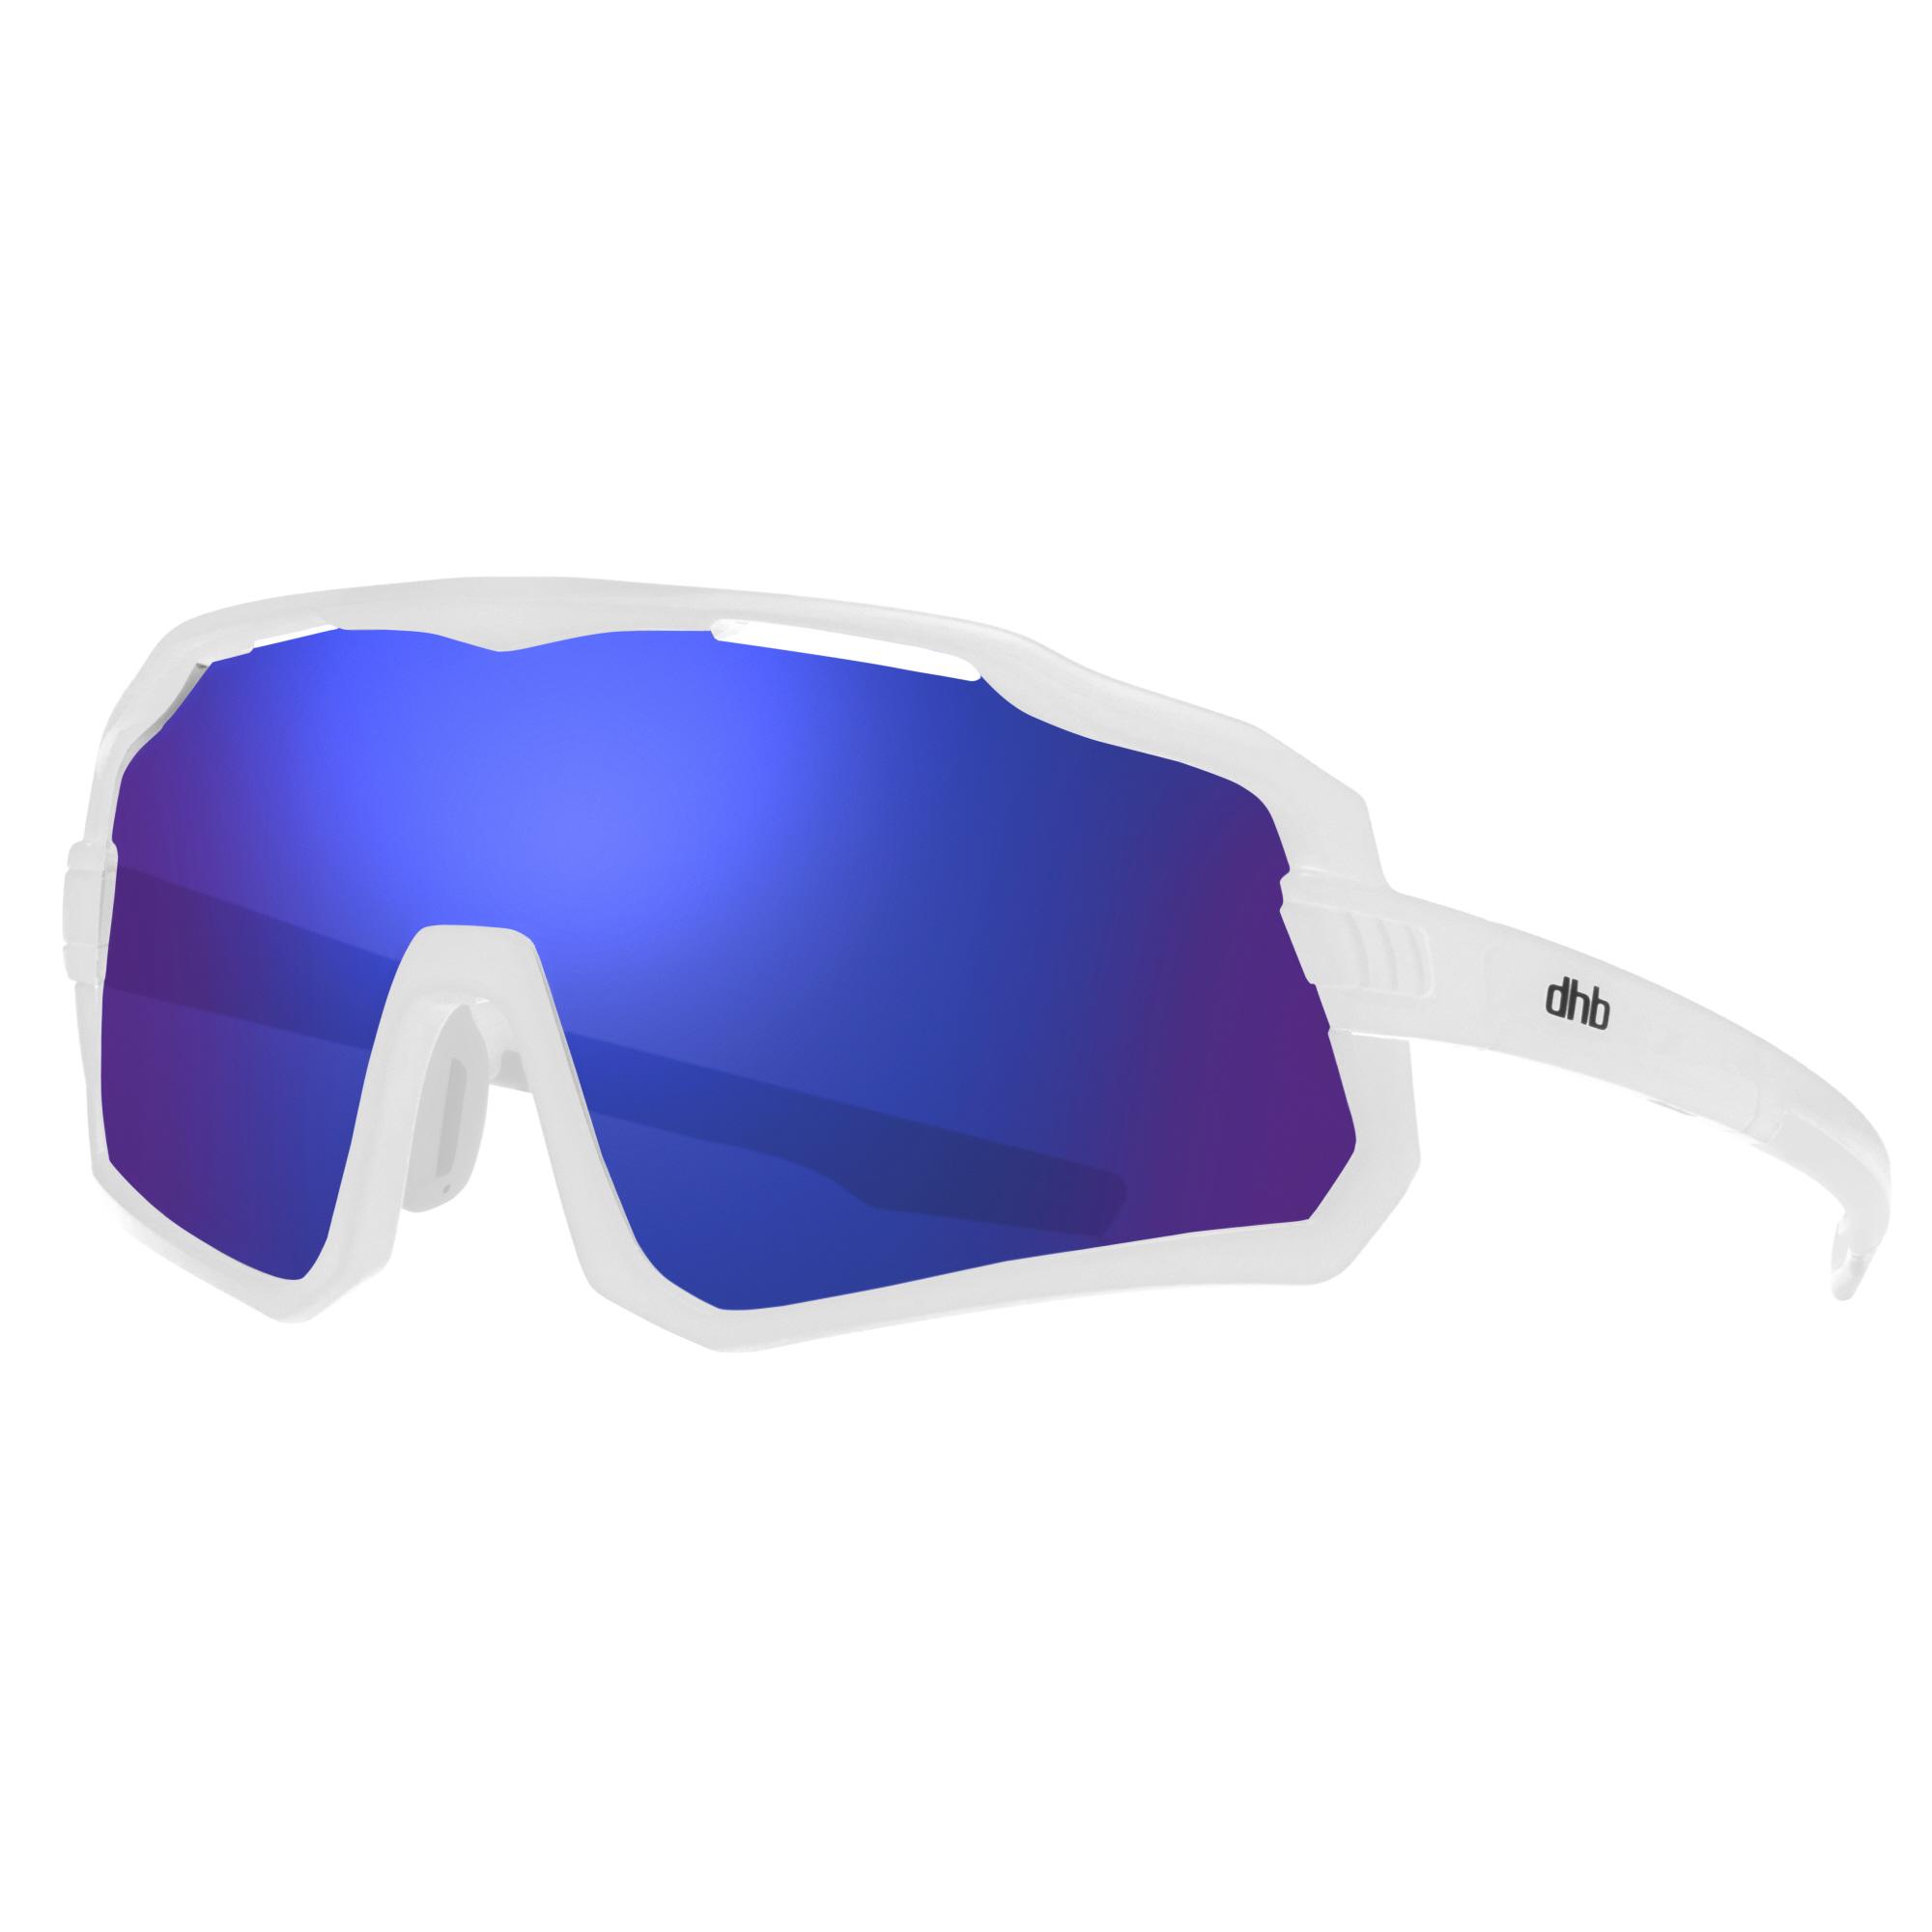 Dhb Aeron Revo Lens Sunglasses  White